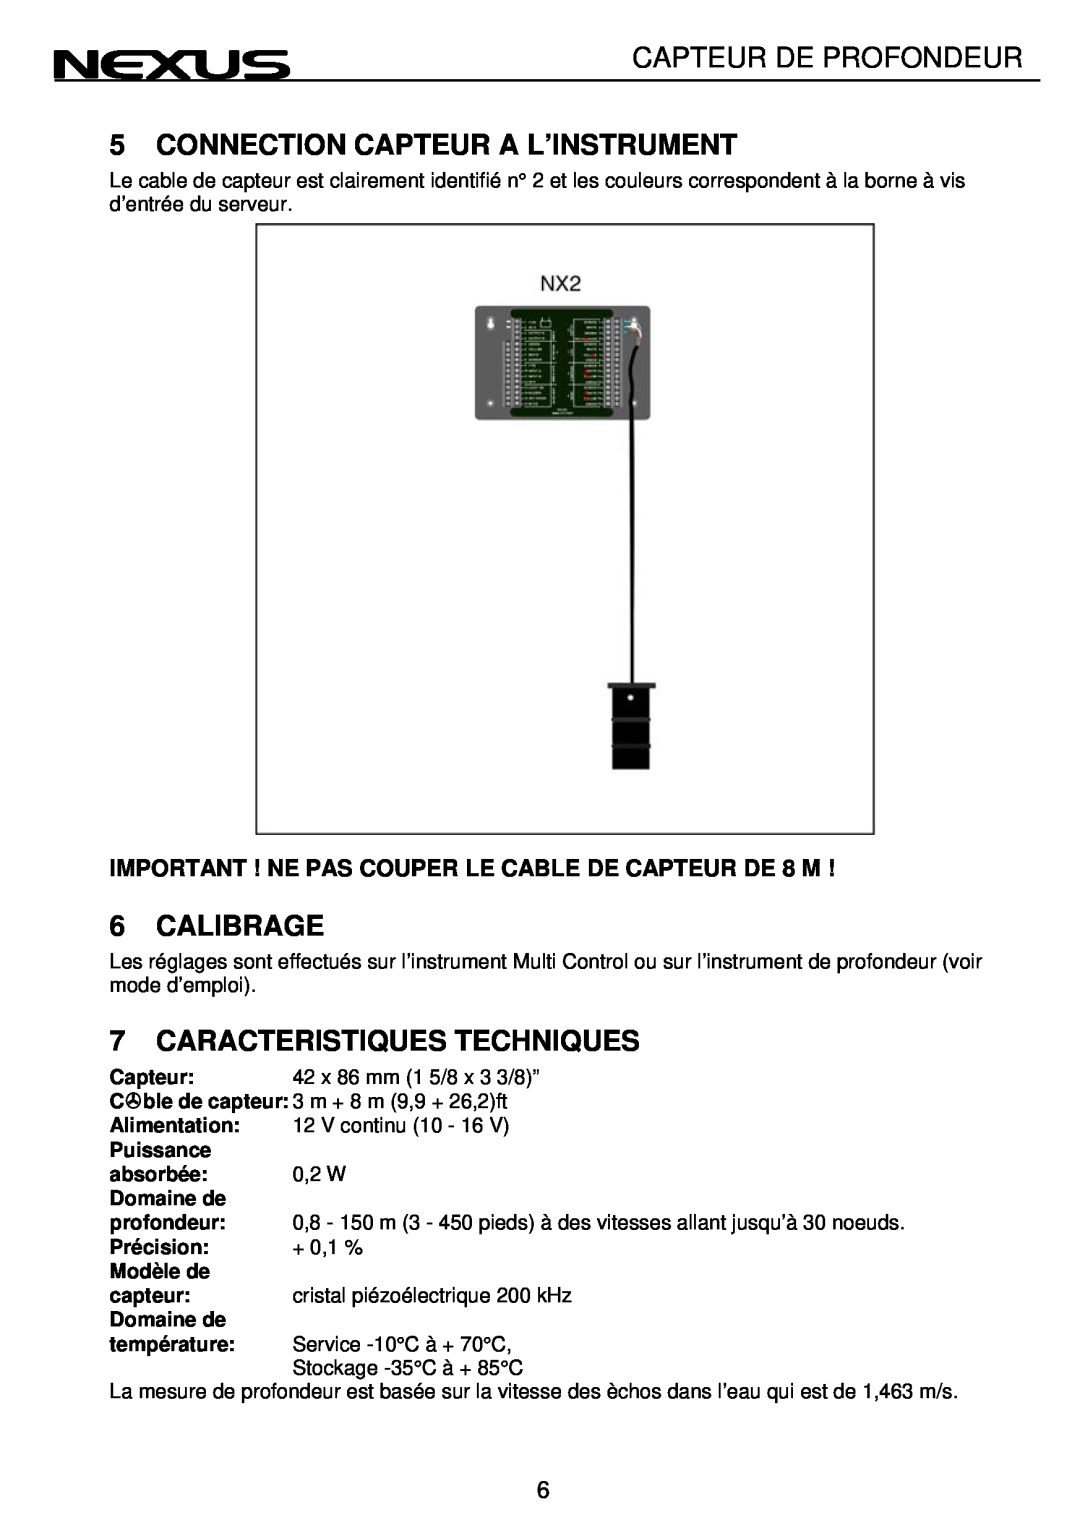 Nexus 21 CAPTEUR DE PROFONDEUR operation manual Capteur De Profondeur, Connection Capteur A L’Instrument, Calibrage 